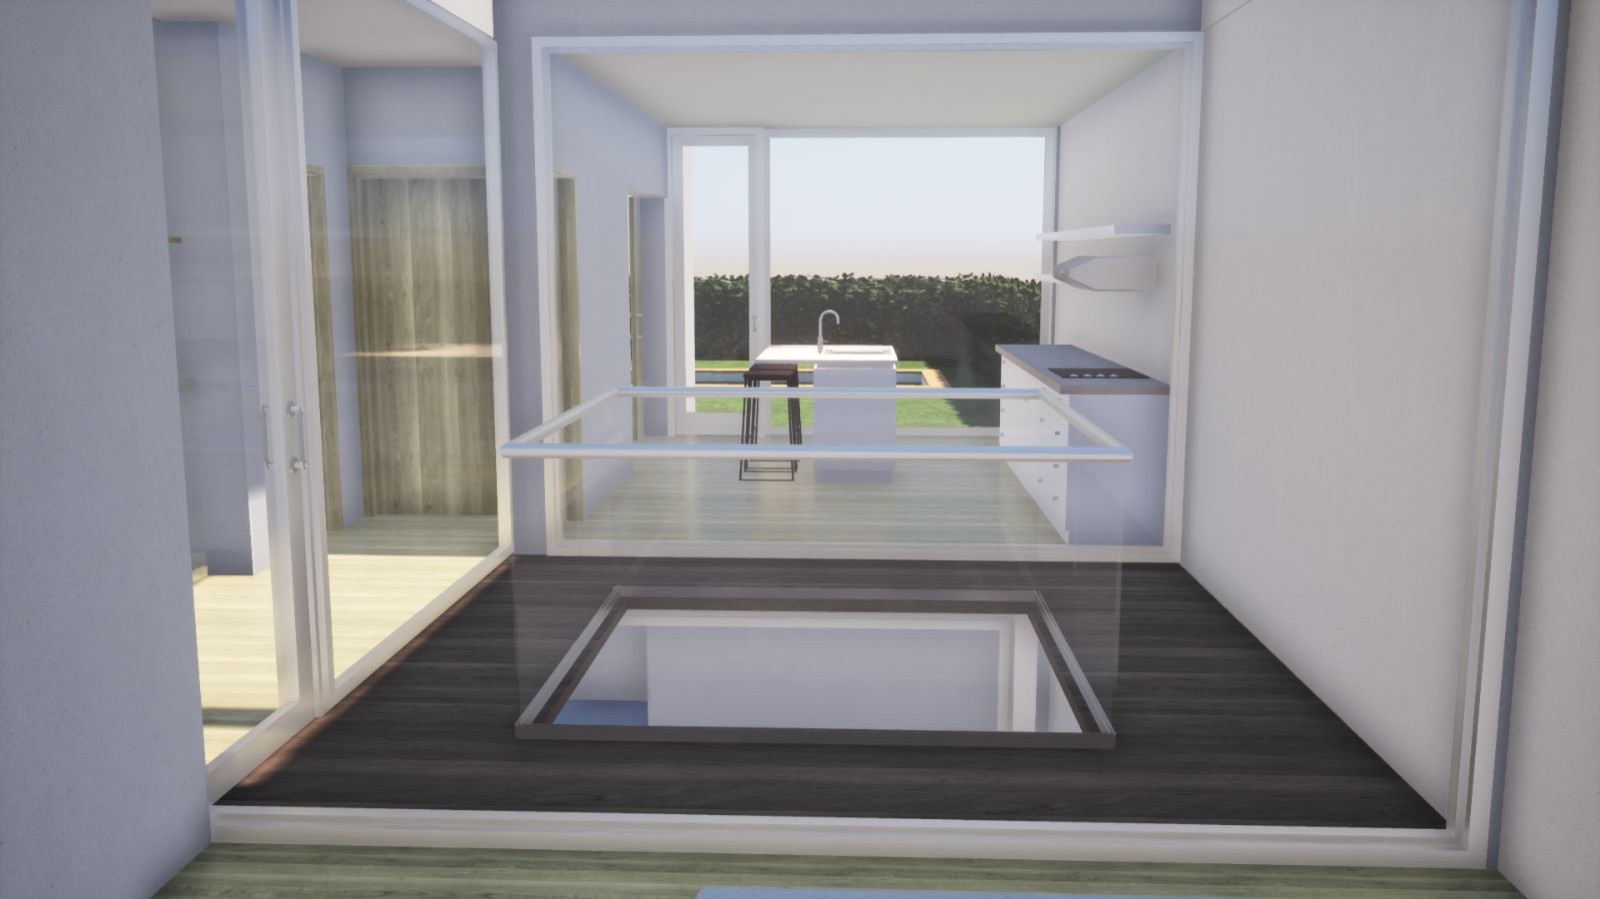 4 bedroom villa, new construction with seaview, for sale in Tavira, Algarve_228004